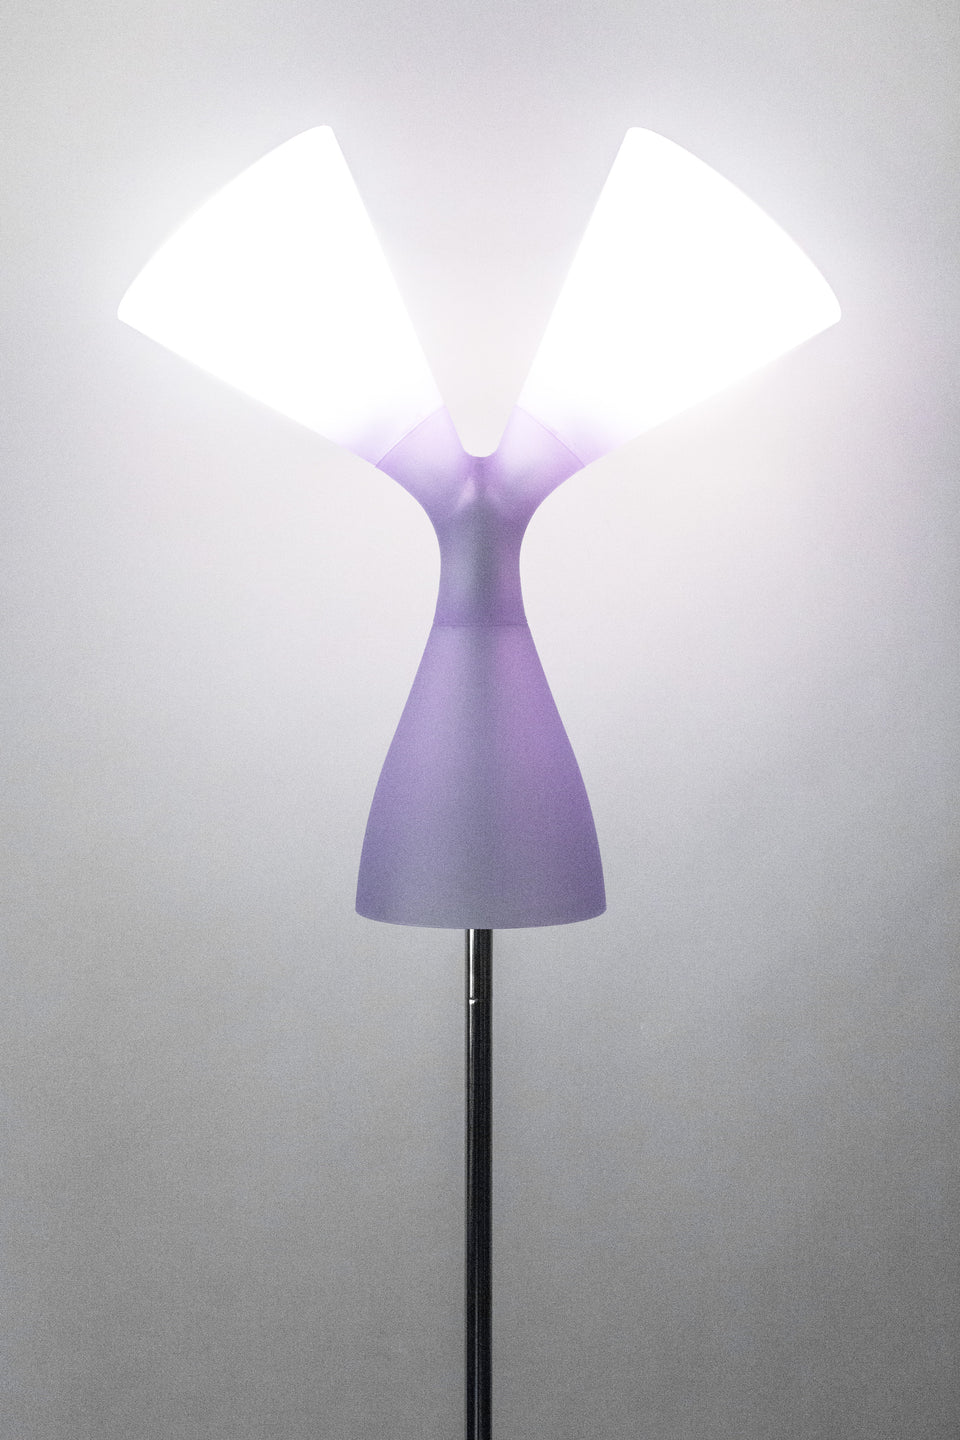 Floor lamp “Triptik” by Karim Rashid for George Kovacs, 2004.